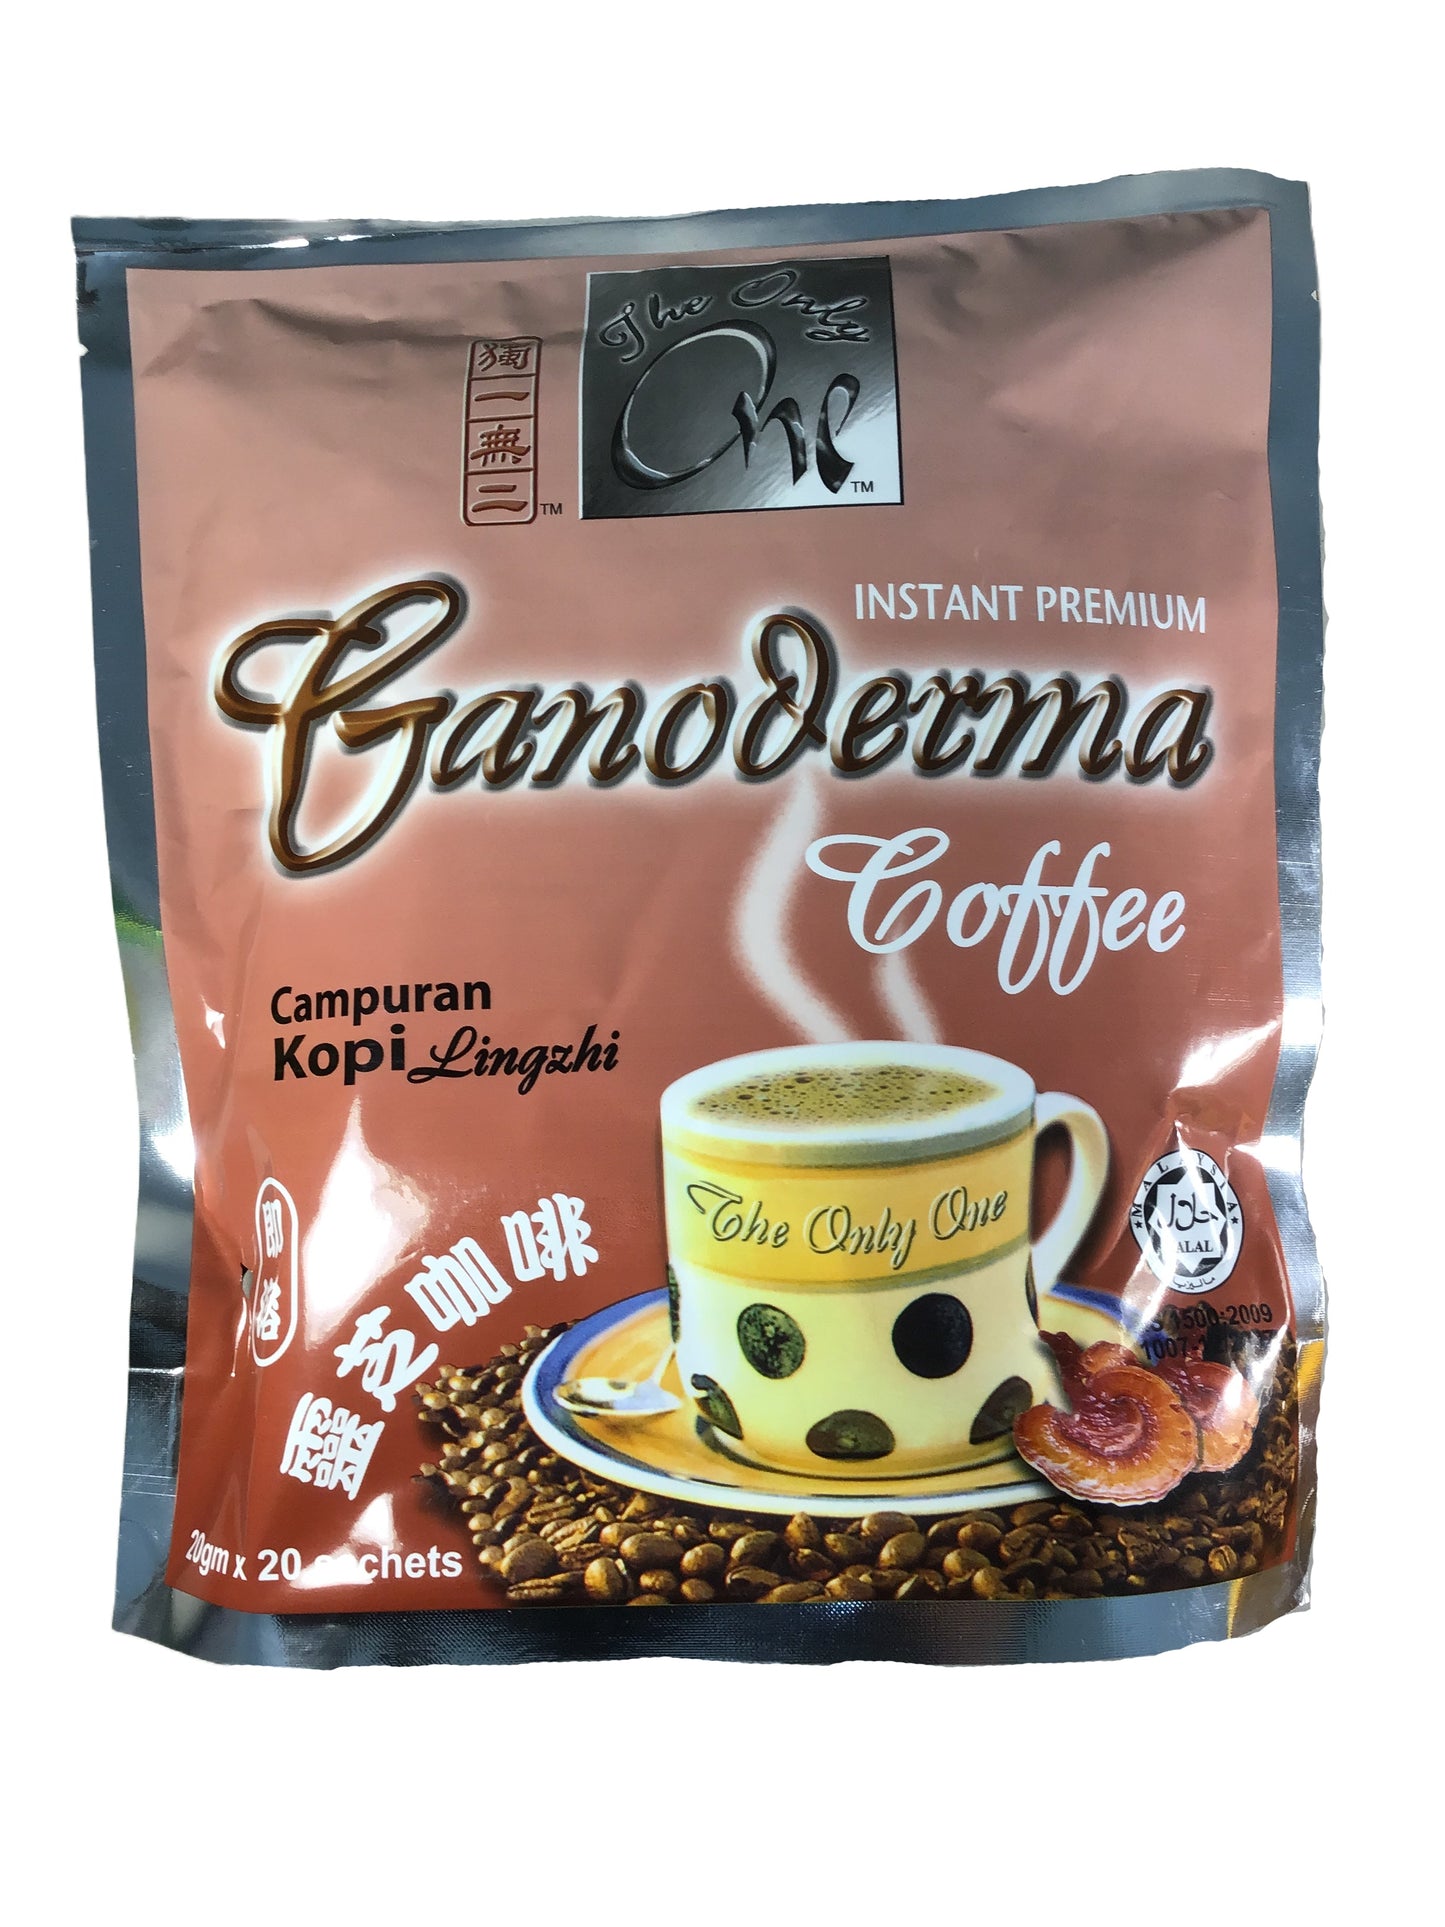 Instant Premium Ganoderma Coffee 独一无二 即溶灵芝咖啡